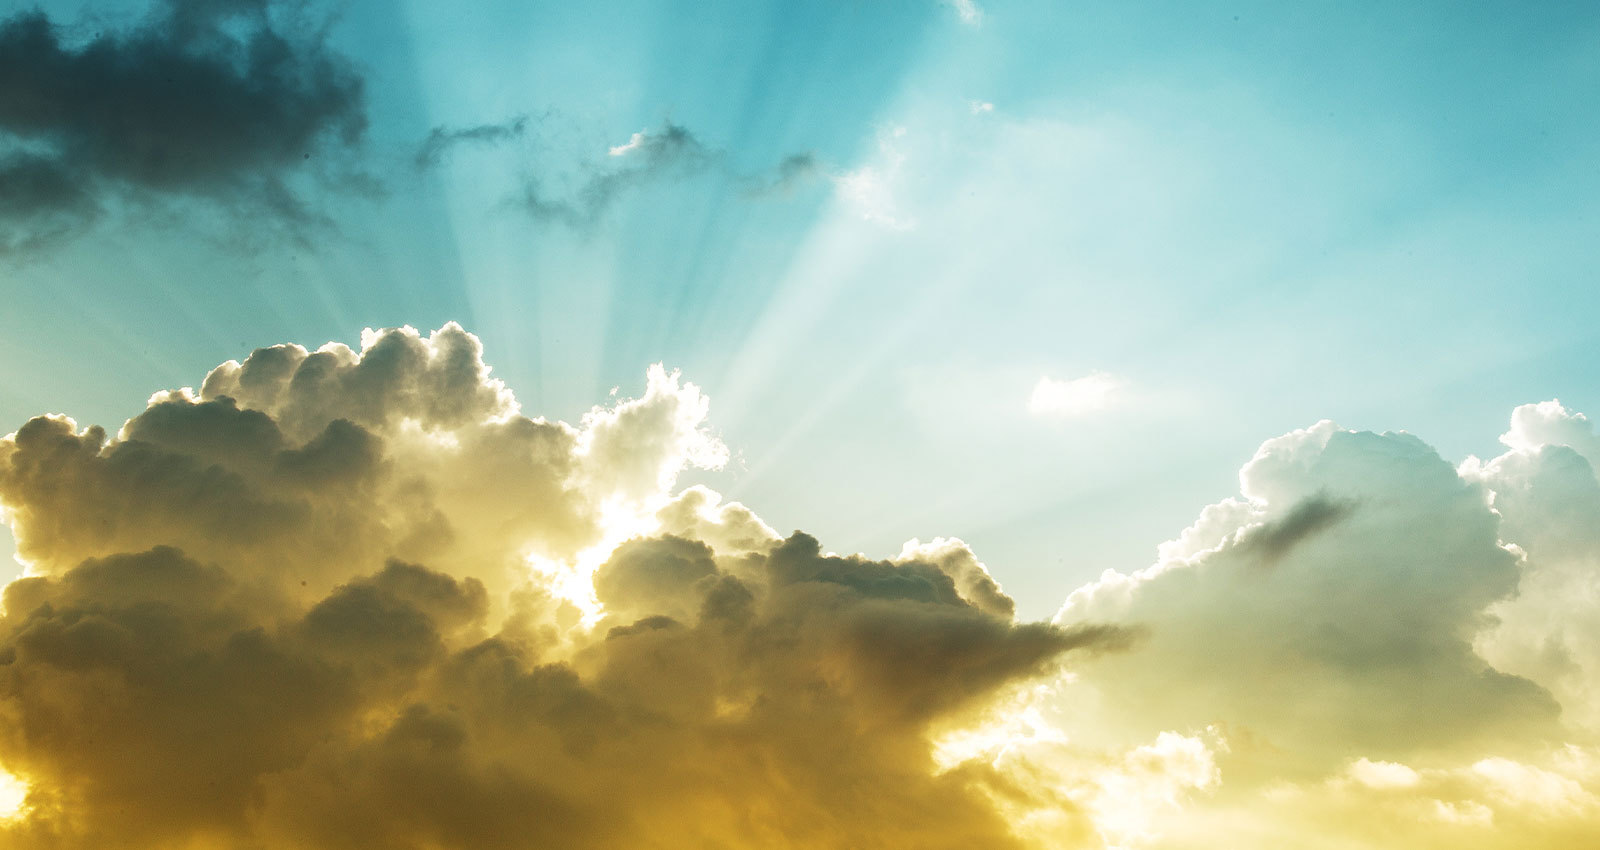 Sunbeams cut through a thick cloud creating a spiritually inspiring image.